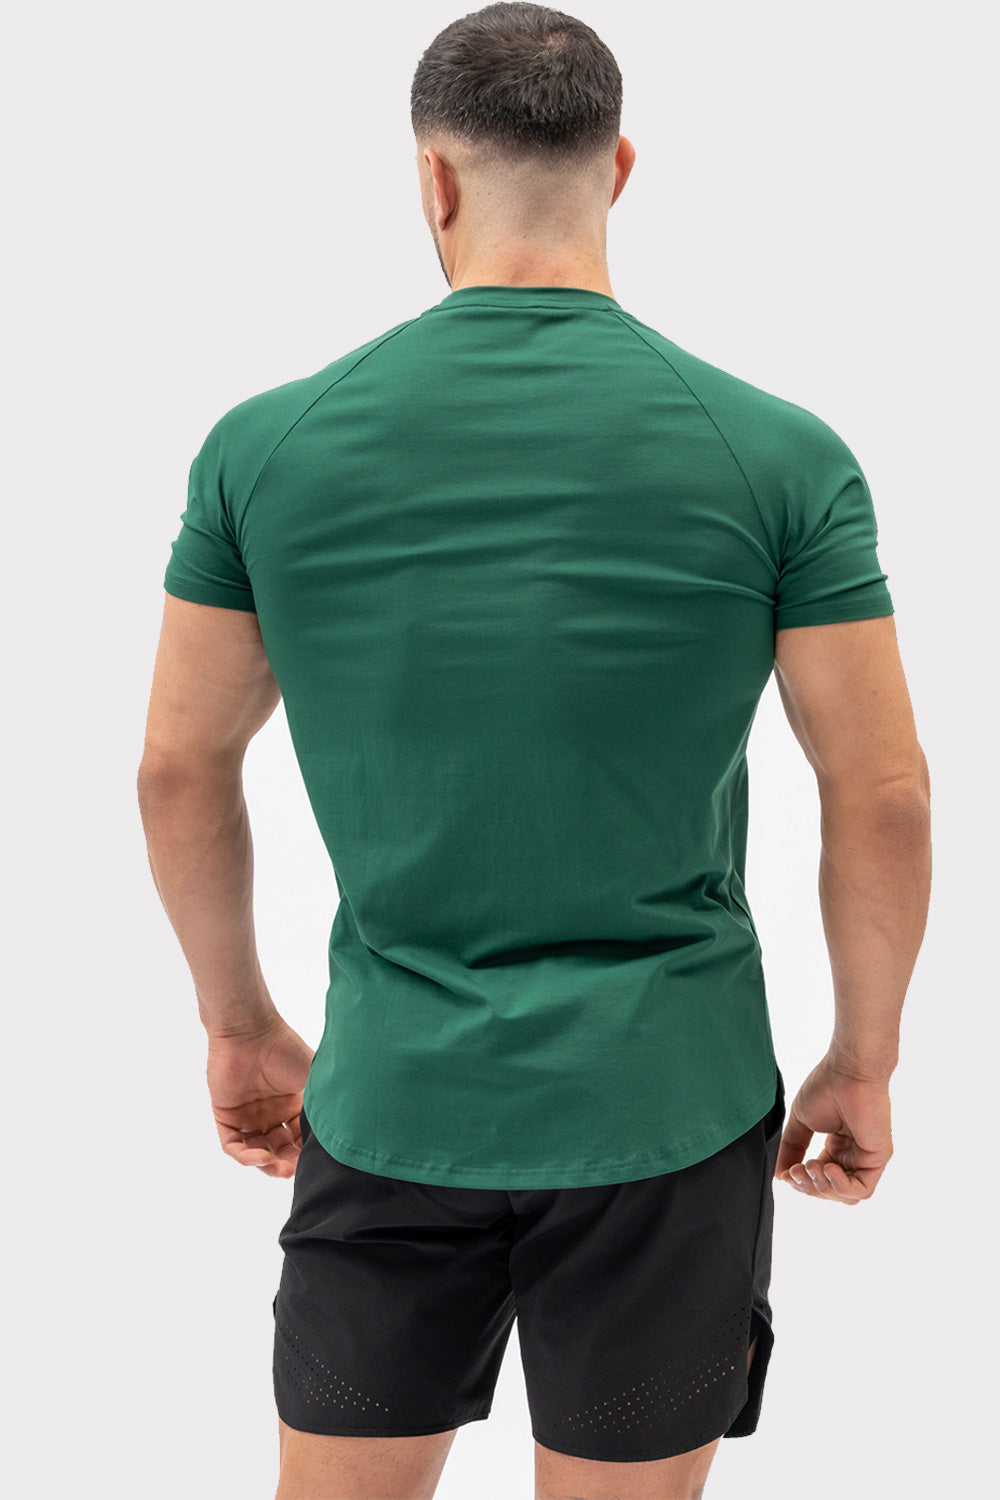 A CODE T-shirt  - Verde Scuro